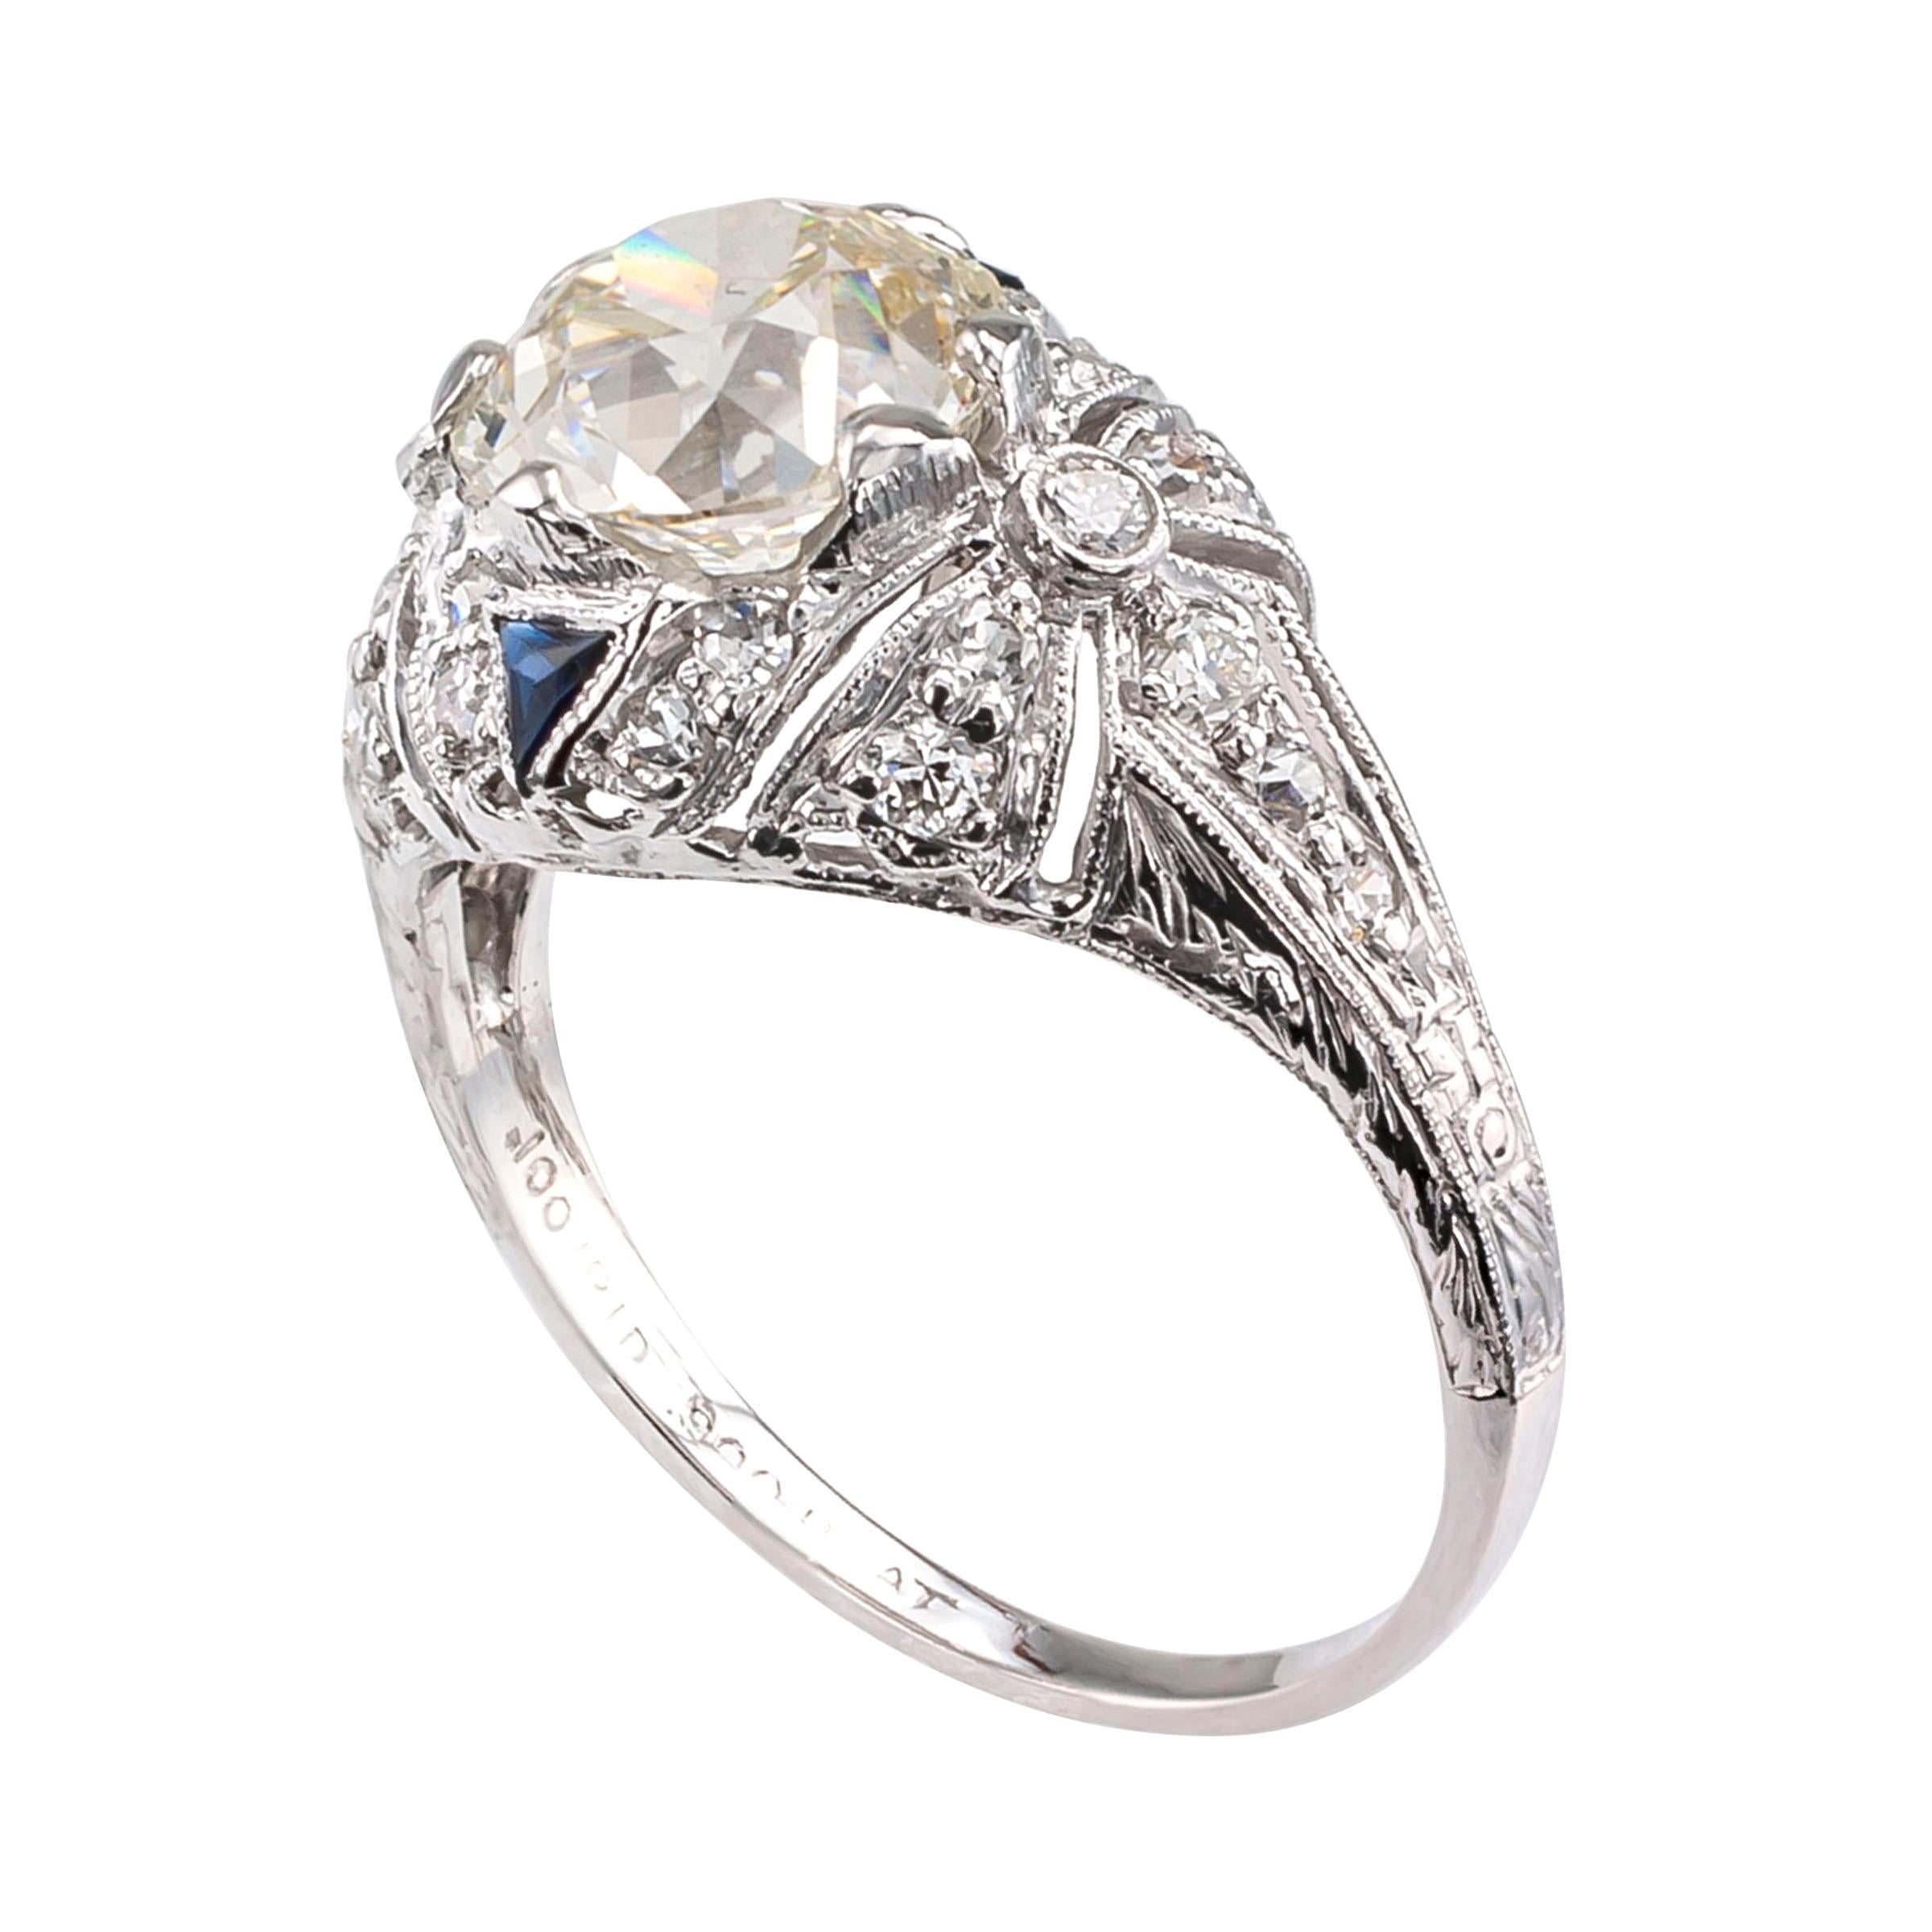 Old European Cut GIA Report Certified 2.10 Carat Diamond Art Deco Engagement Ring